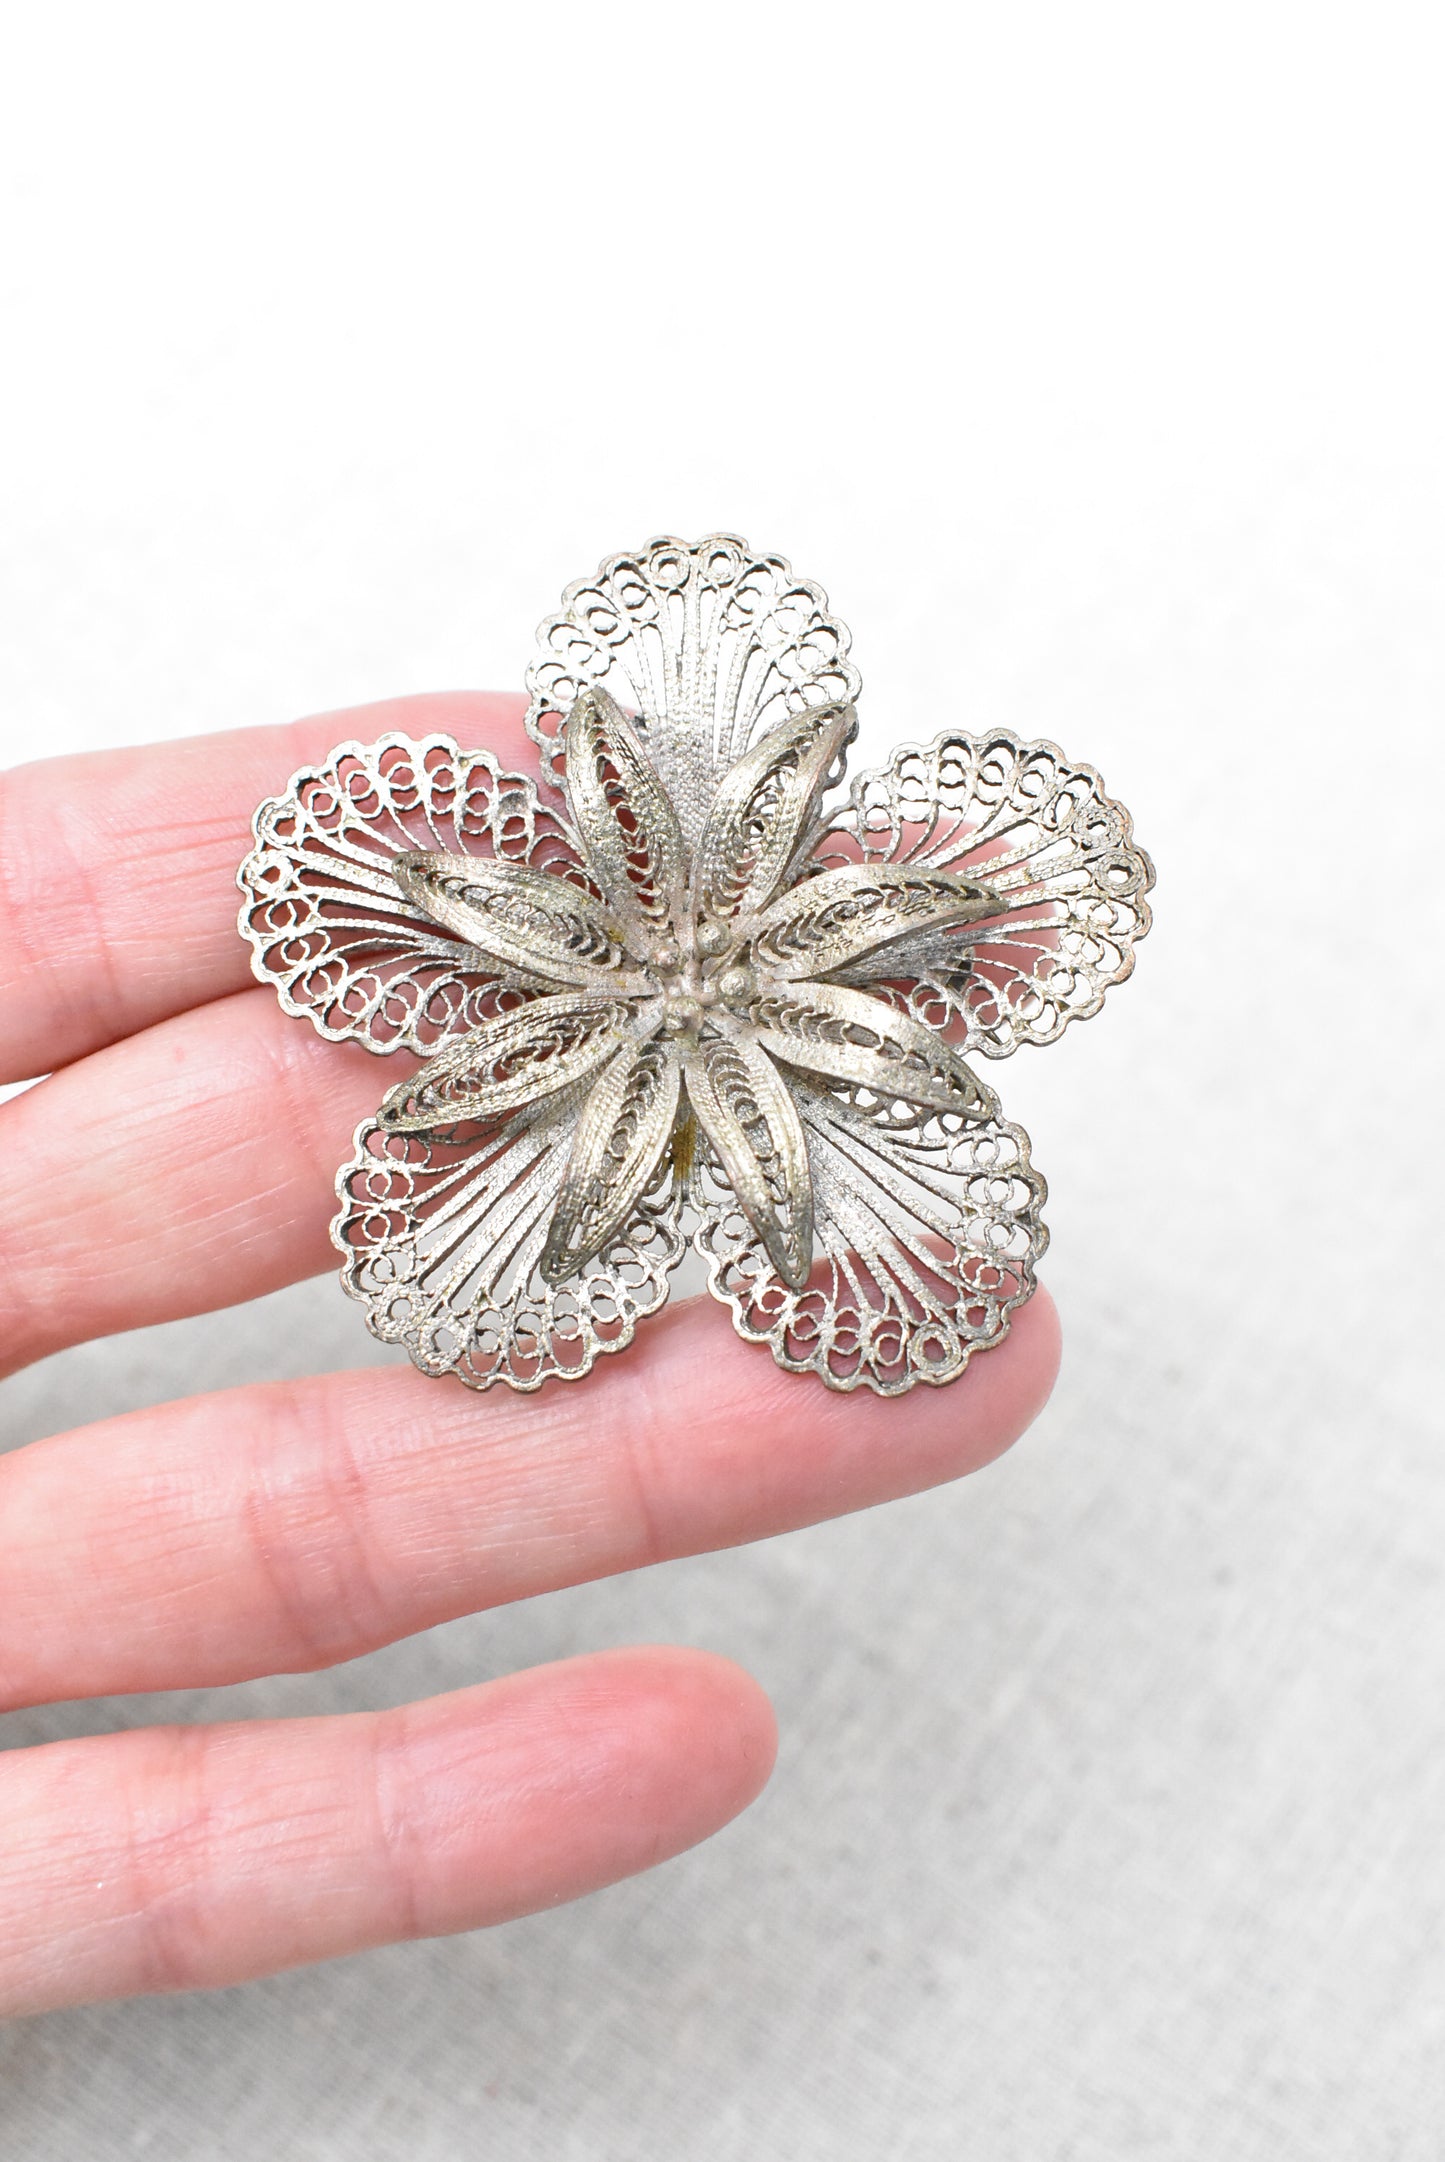 Vintage silver filigree flower brooch